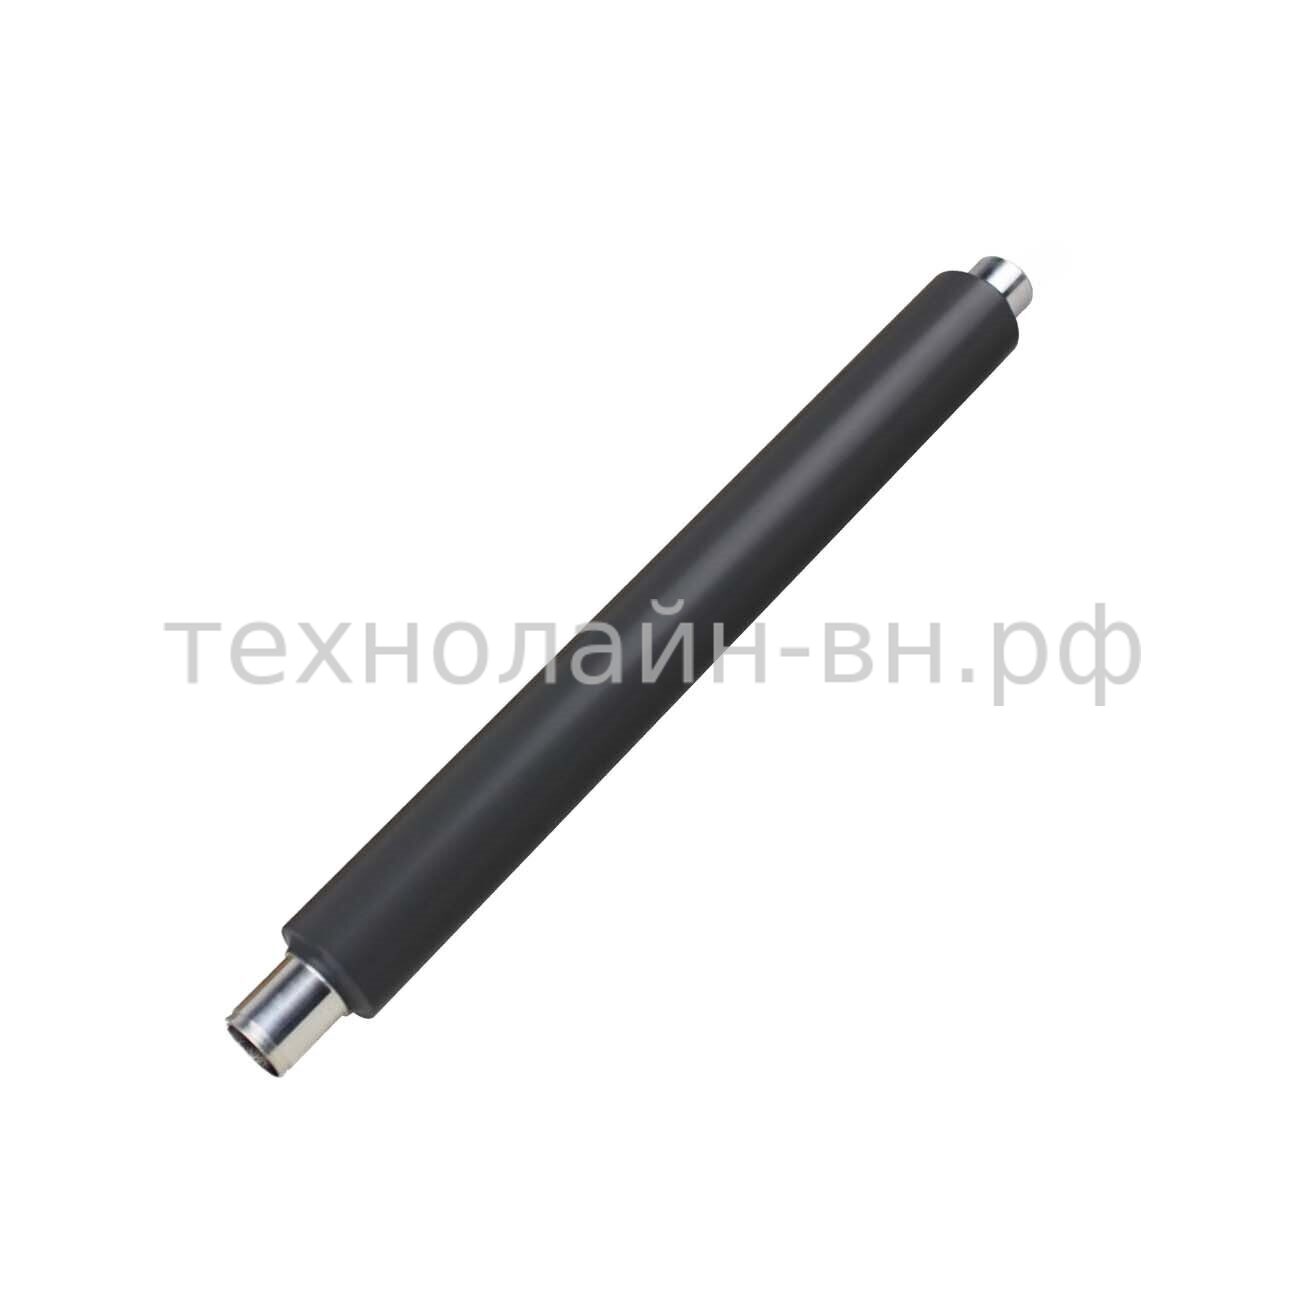 Вал тефлоновый верхний Hi-Black для Kyocera FS-4100DN/ 4200DN/ 4300DN